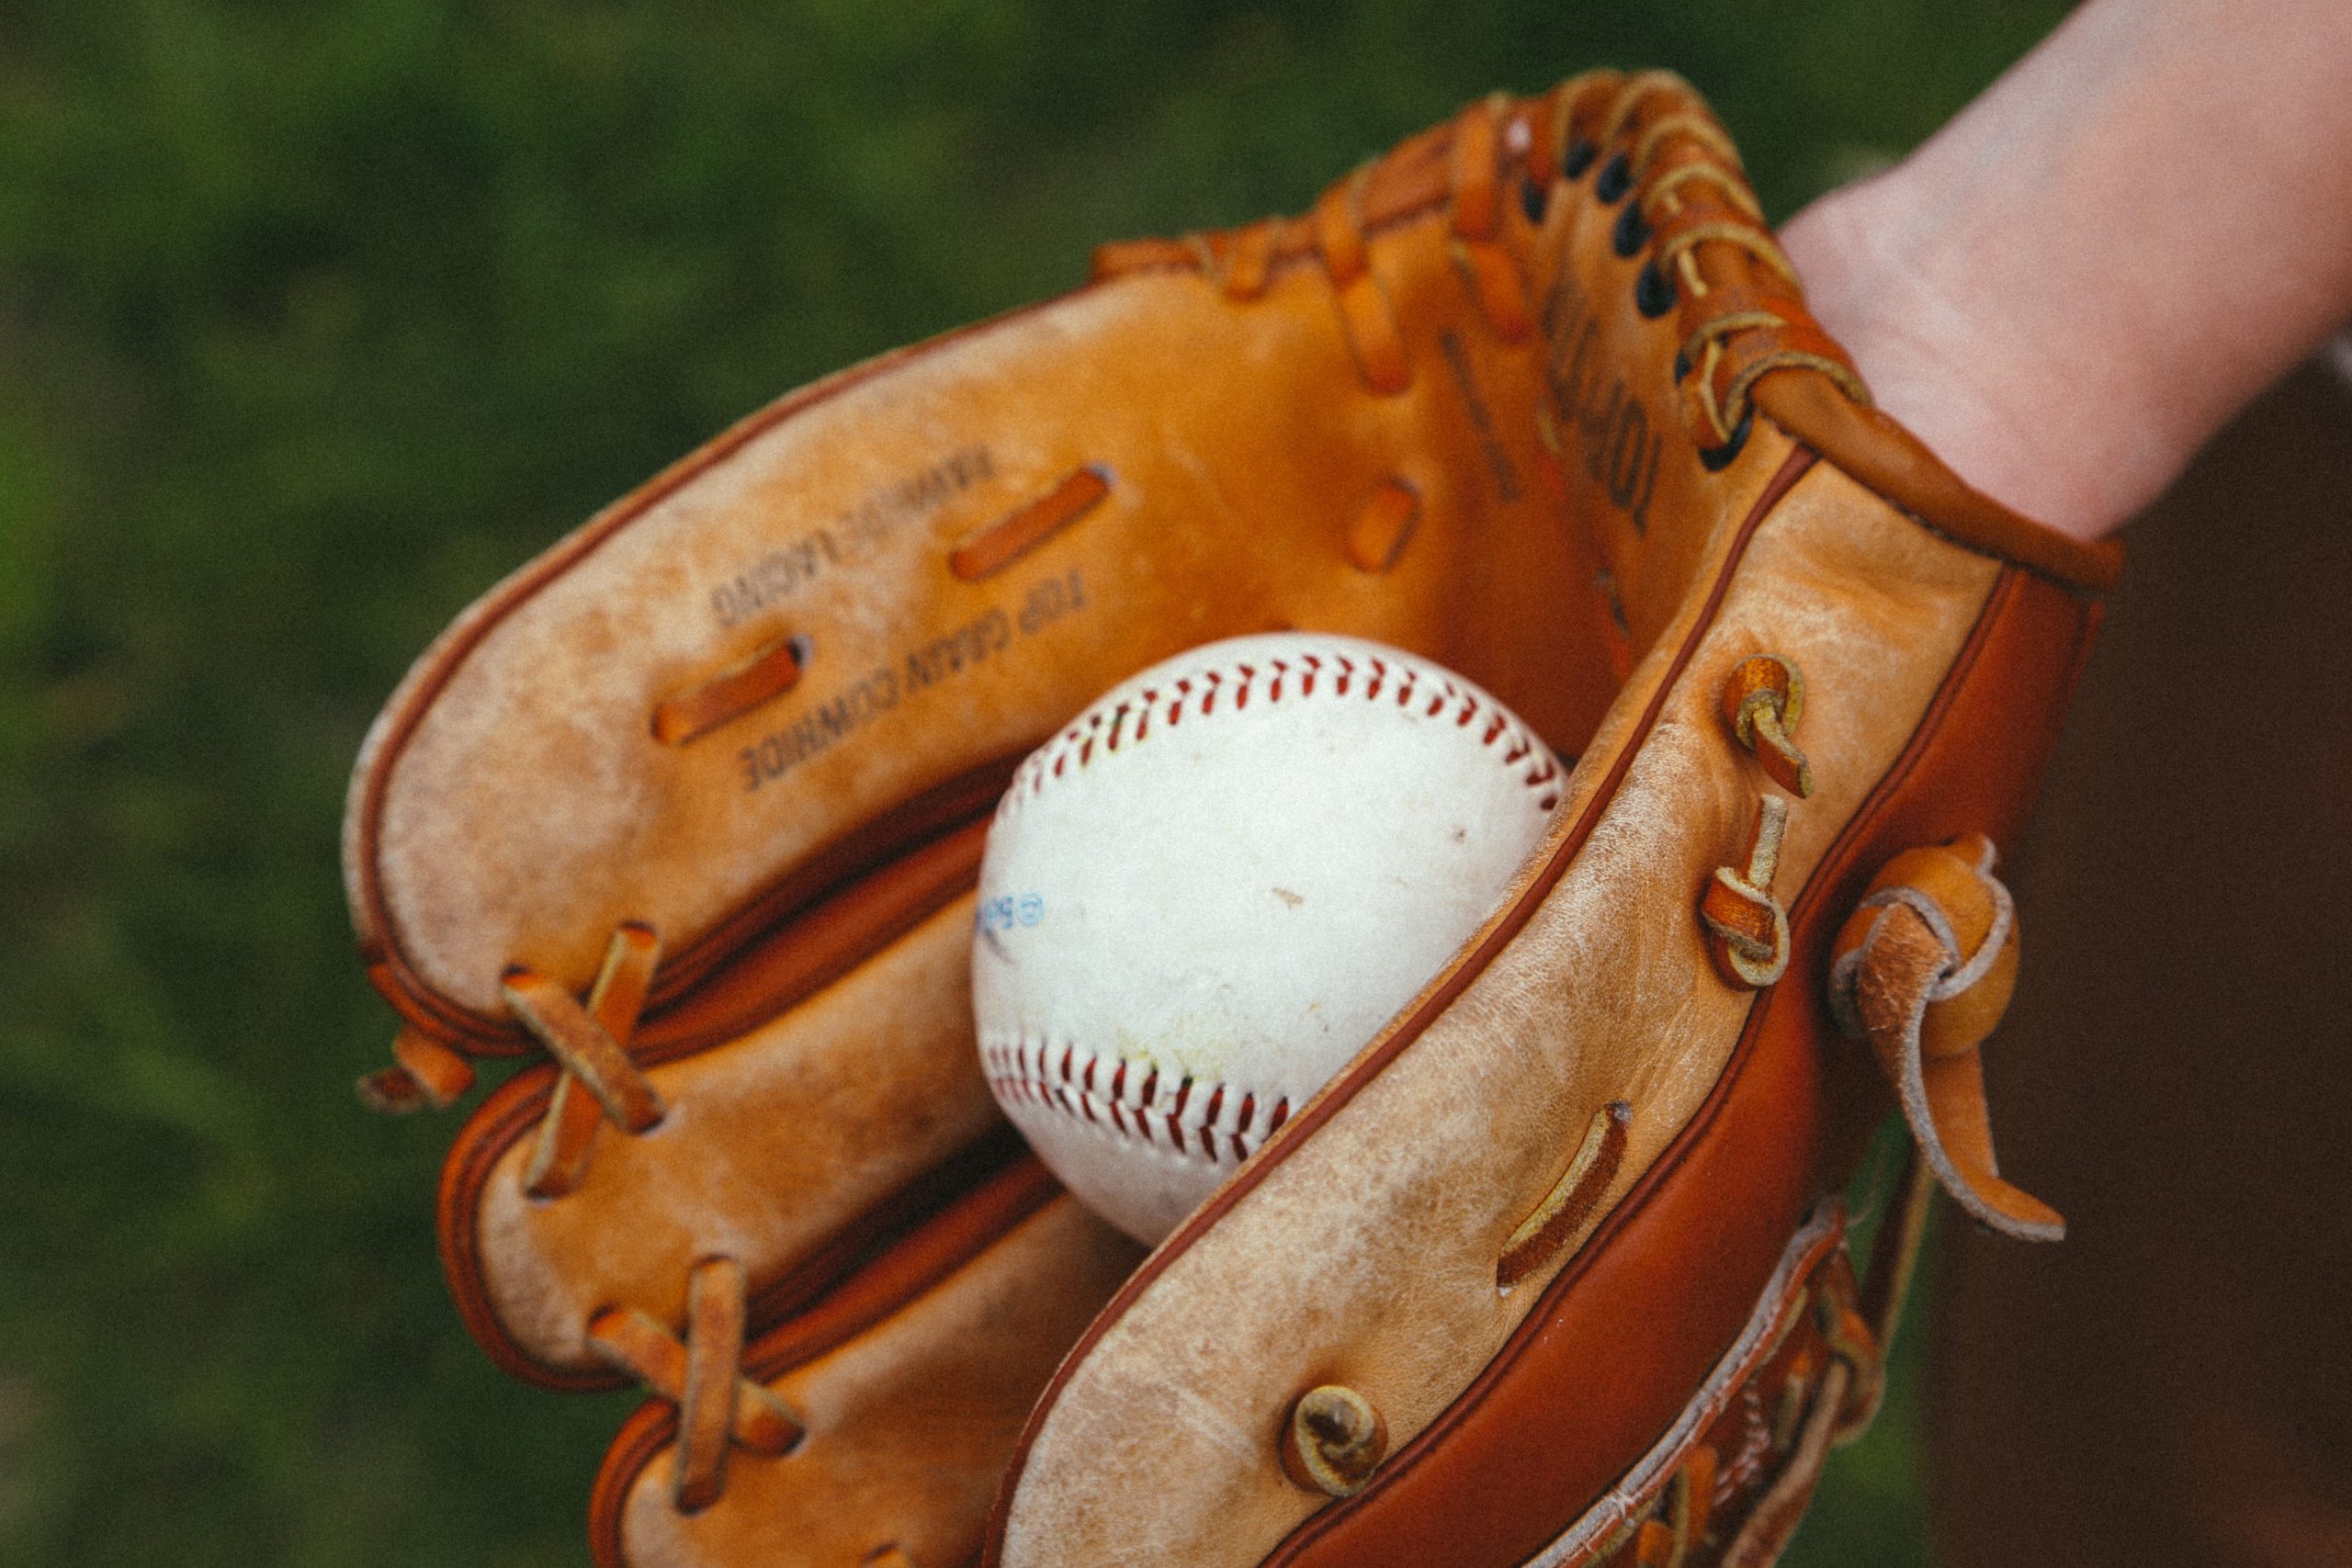 10 College Baseball Stars to Watch Ahead of 2022 MLB Draft